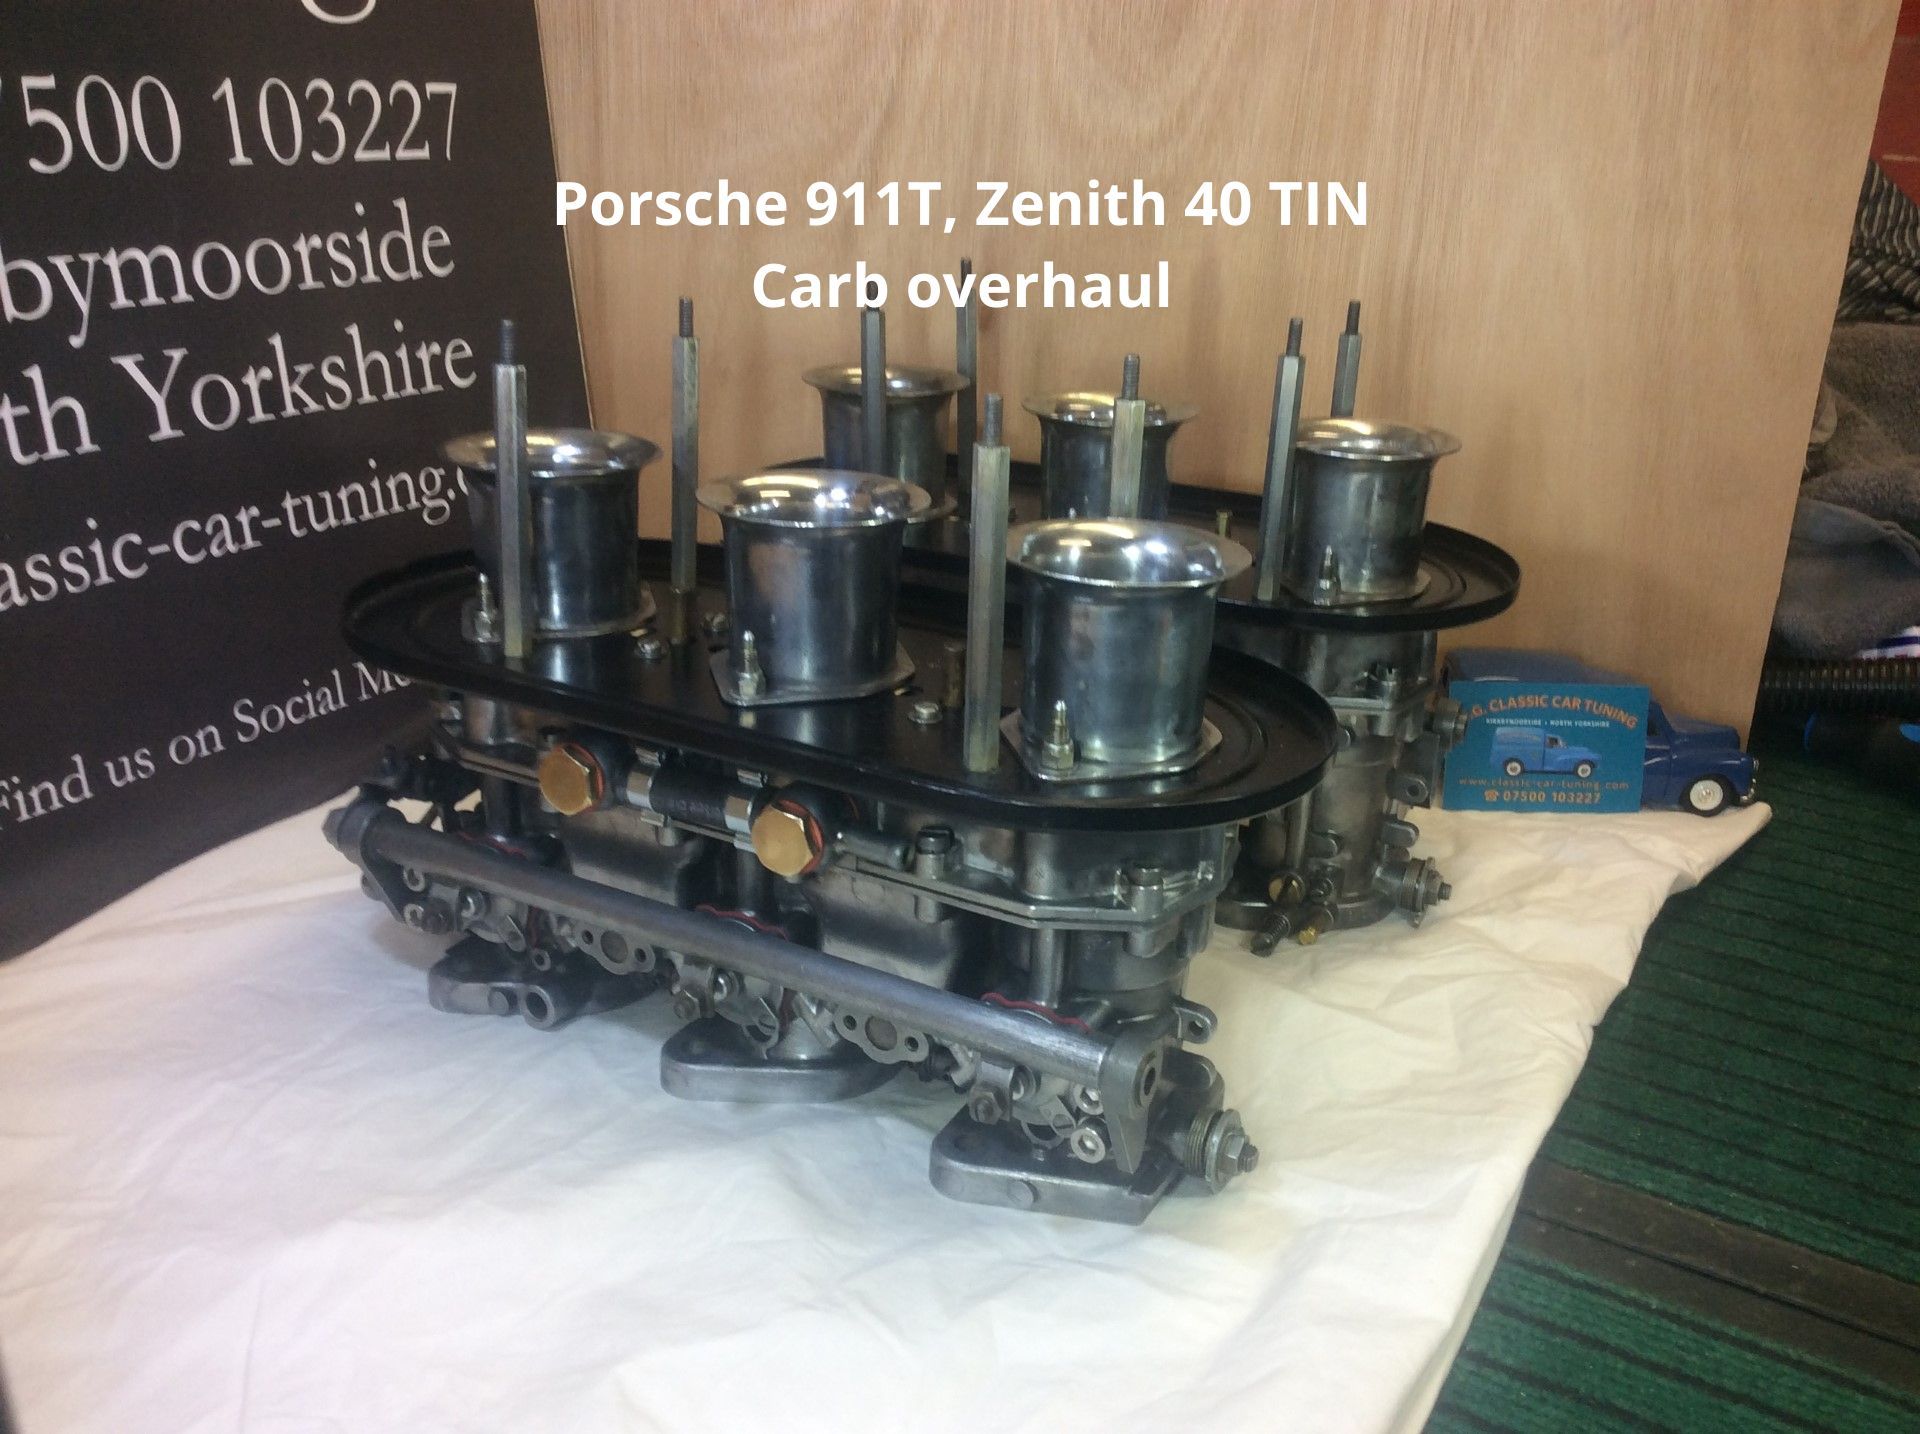 Porsche 911T Carburettors, Zenith 40 TIN overhauled by AG Classic Car Tuning